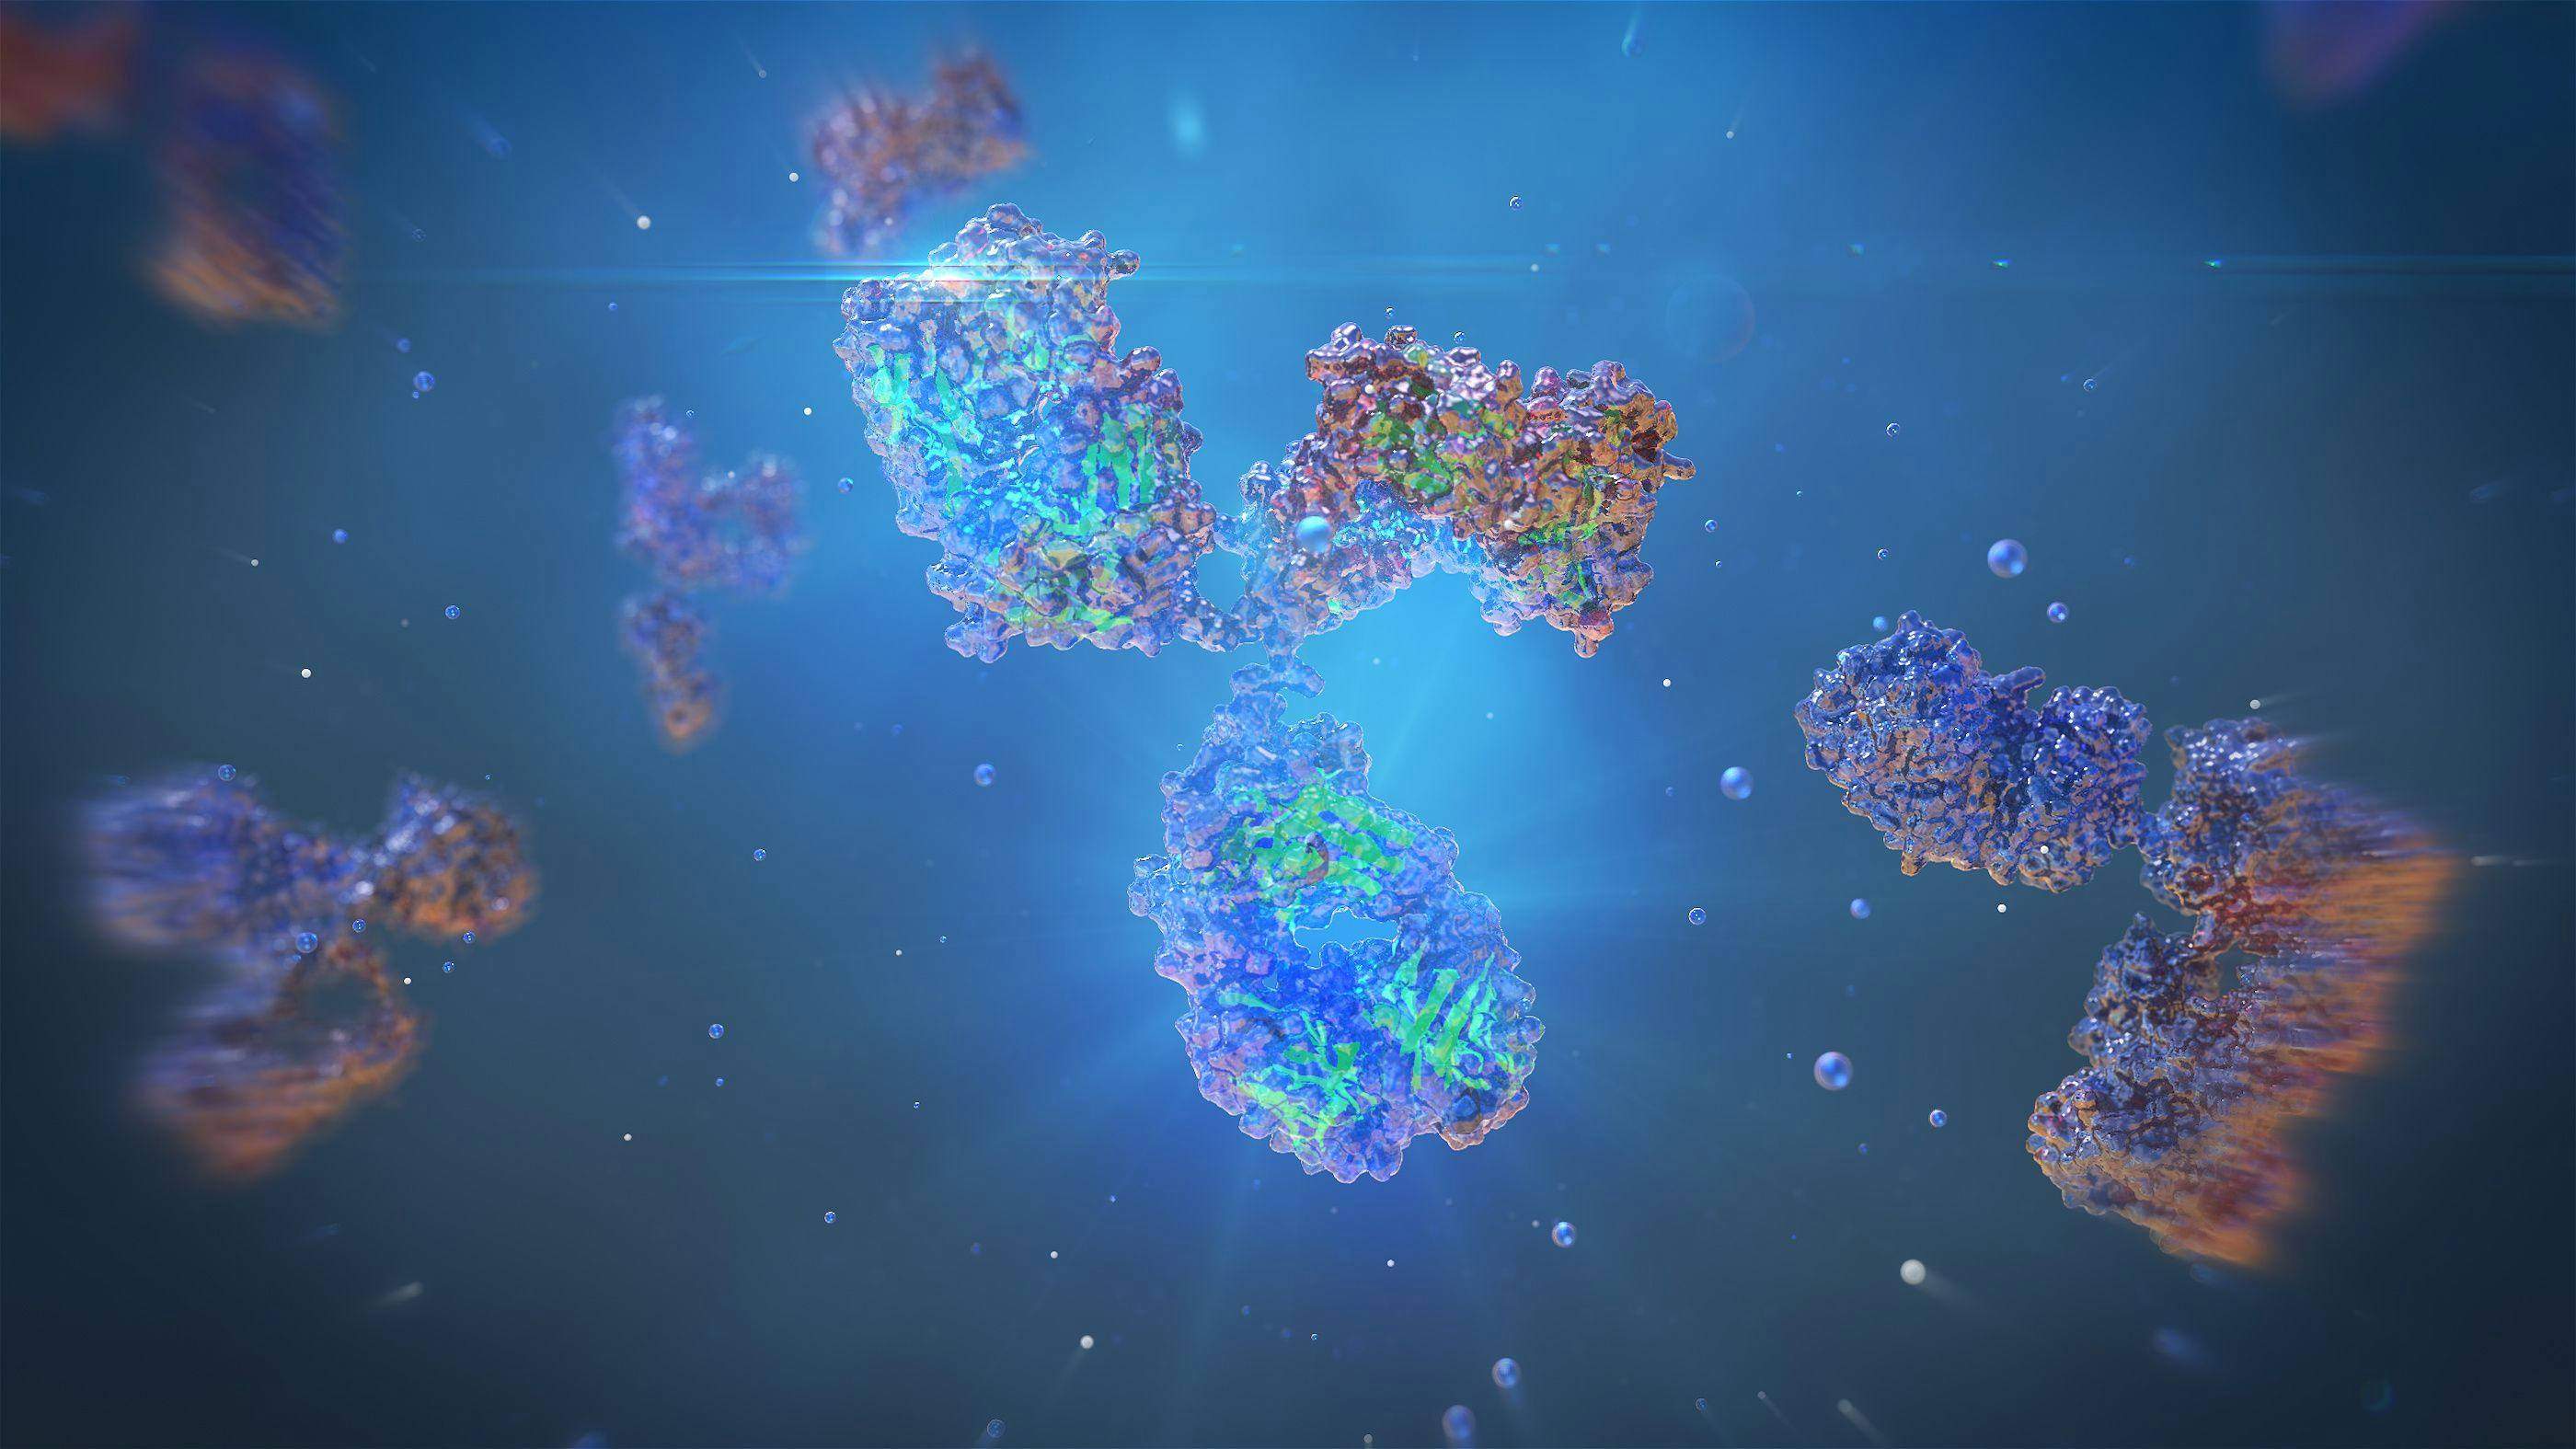 Human monoclonal antibody to fight cancer | Image Credit: © Yuriy - stock.adobe.com